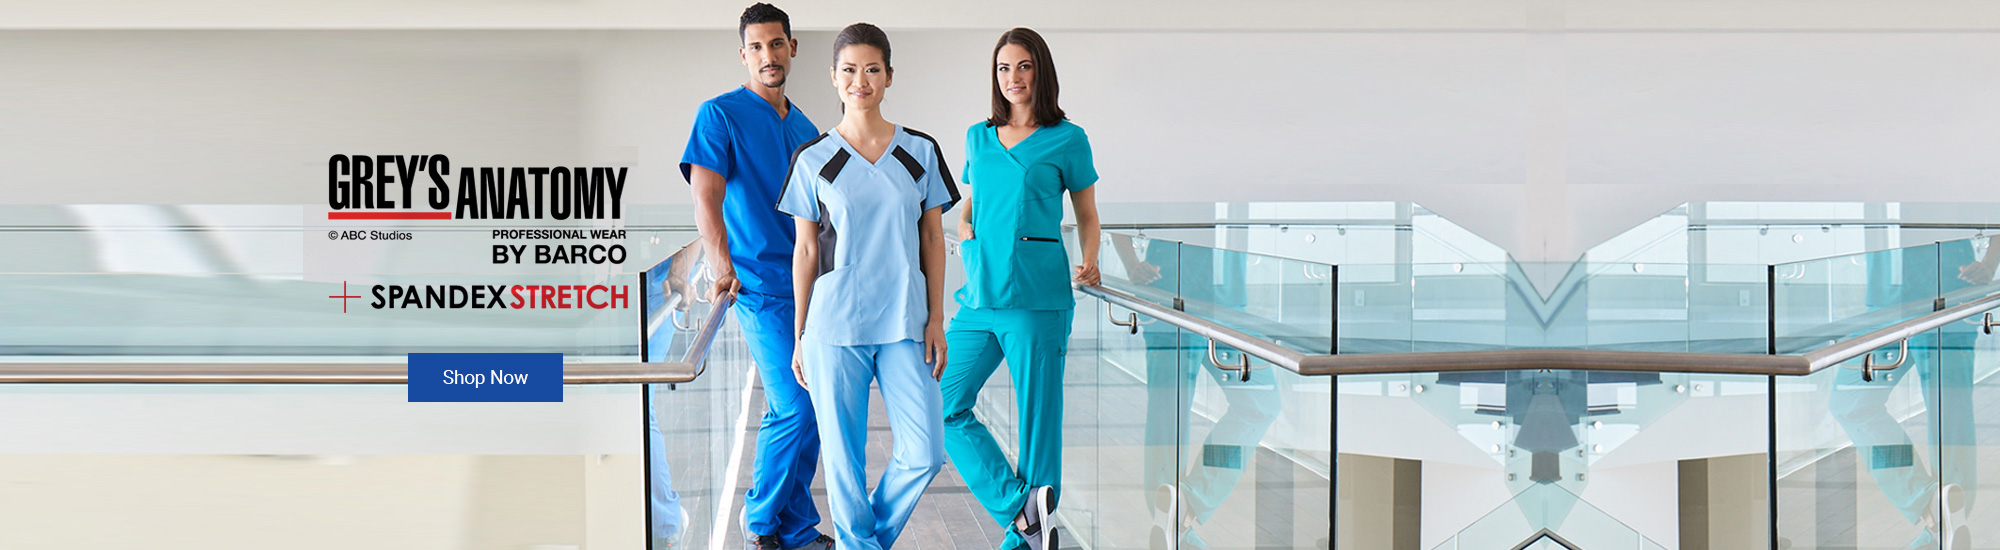 Grey's Anatomy Spandex Stretch medical uniforms